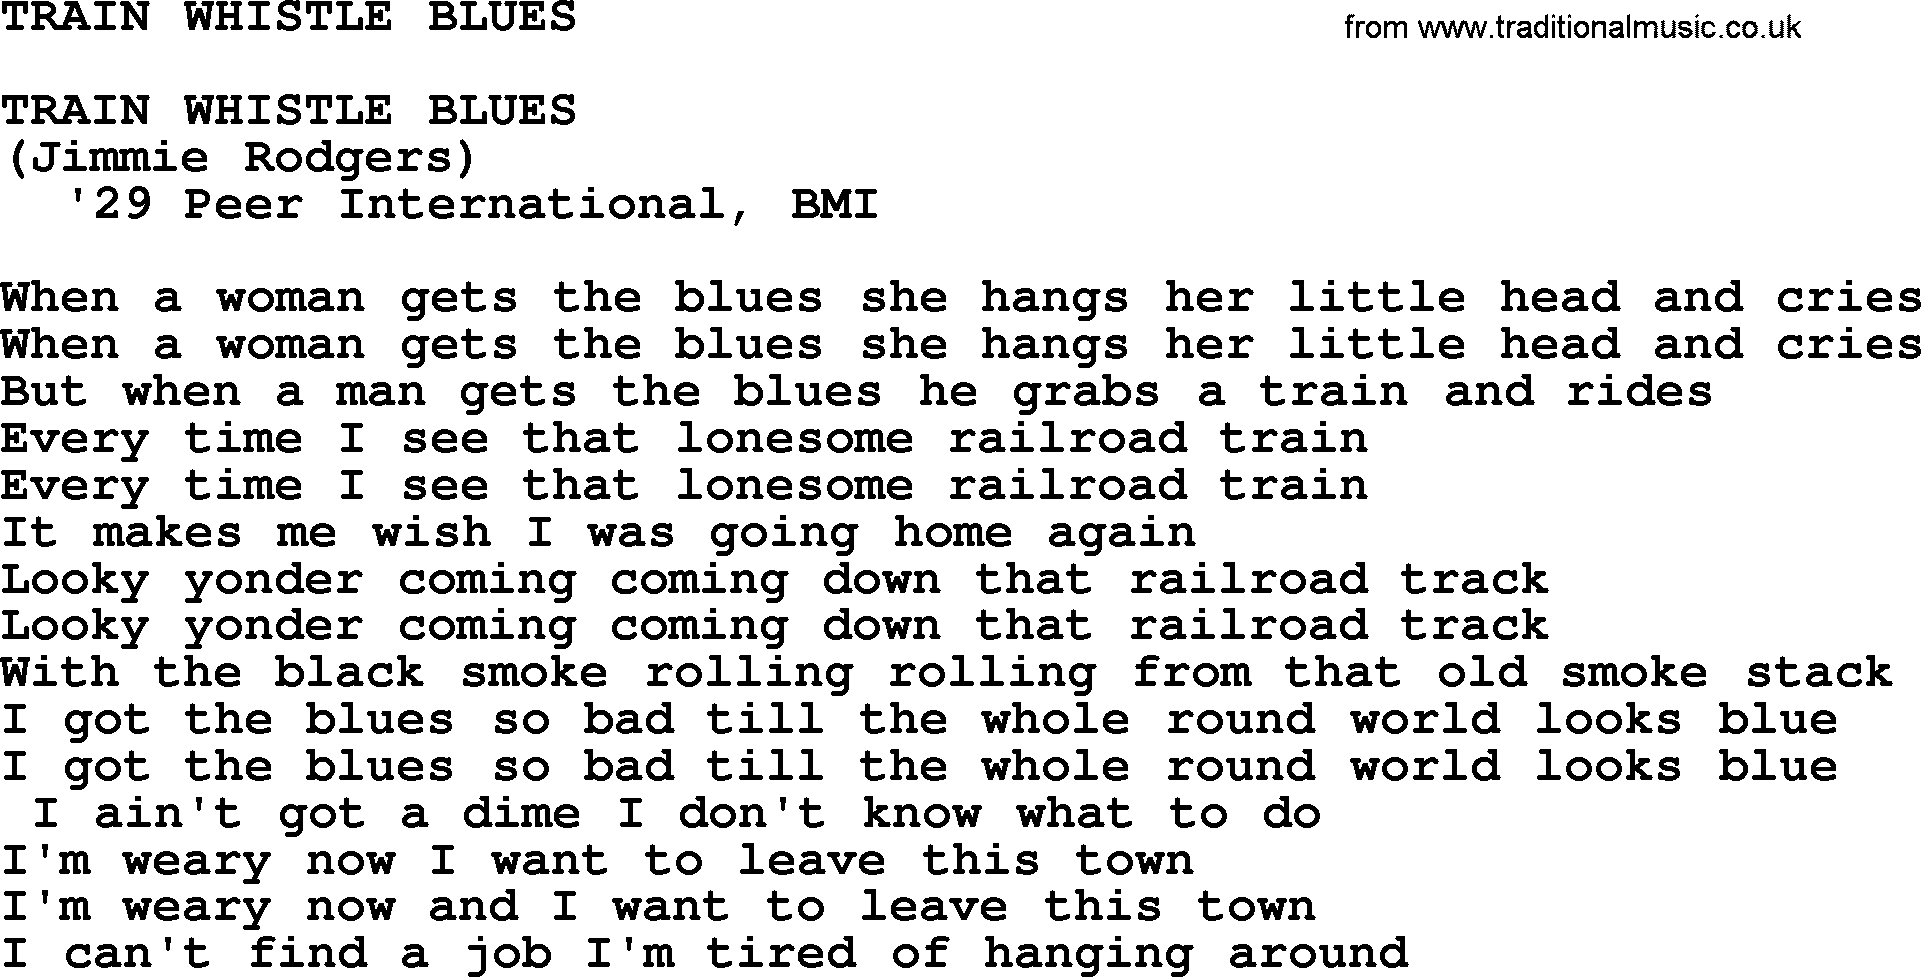 Merle Haggard song: Train Whistle Blues, lyrics.